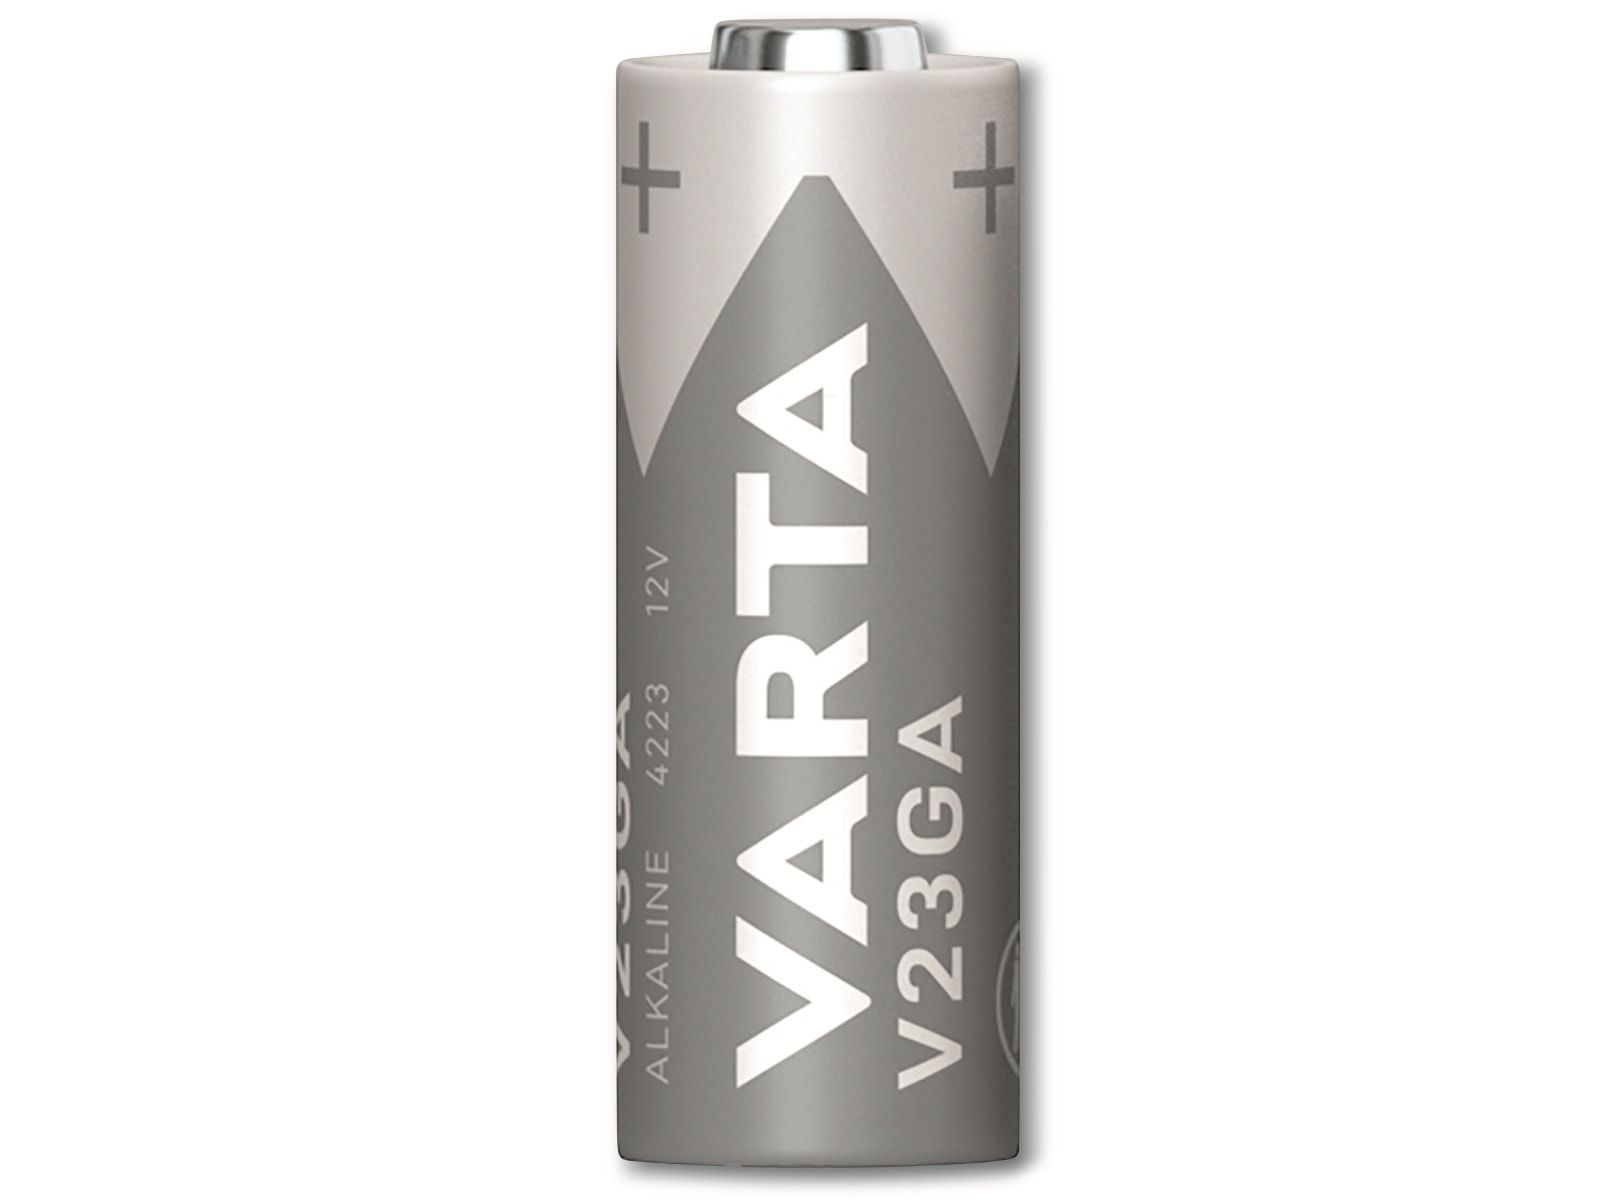 Ah 0.05 Mando VARTA Volt, MN21 V23GA 12V 12 Fotobatterie (1er Distancia Fotobatterie, Electronics AlMn, Blister)